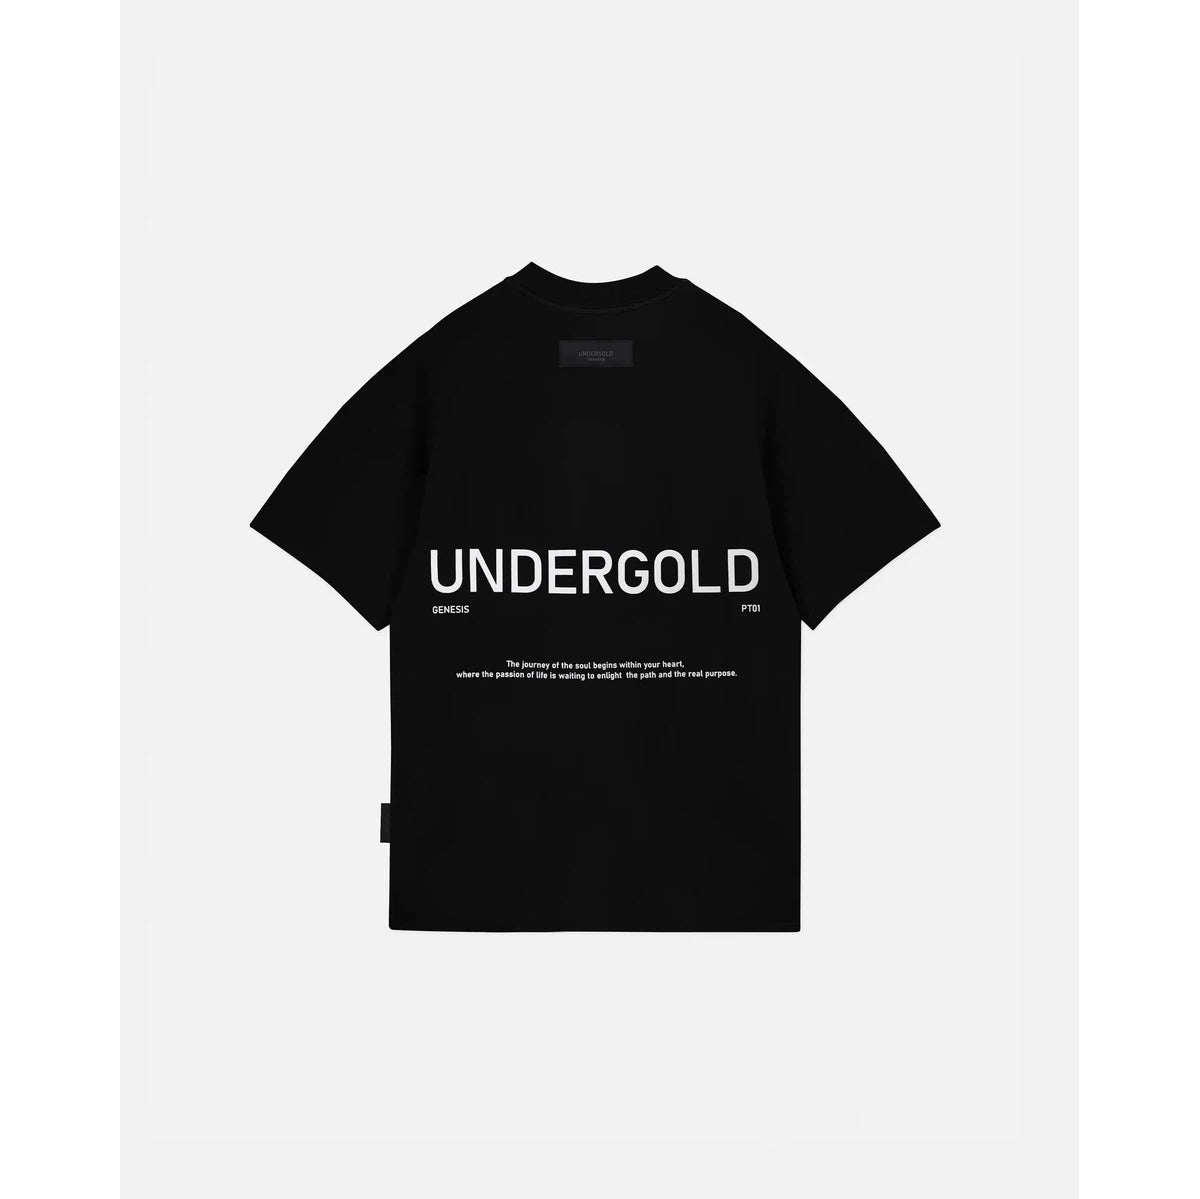 Undergold Genesis PT/1 Missionary T-shirt Black